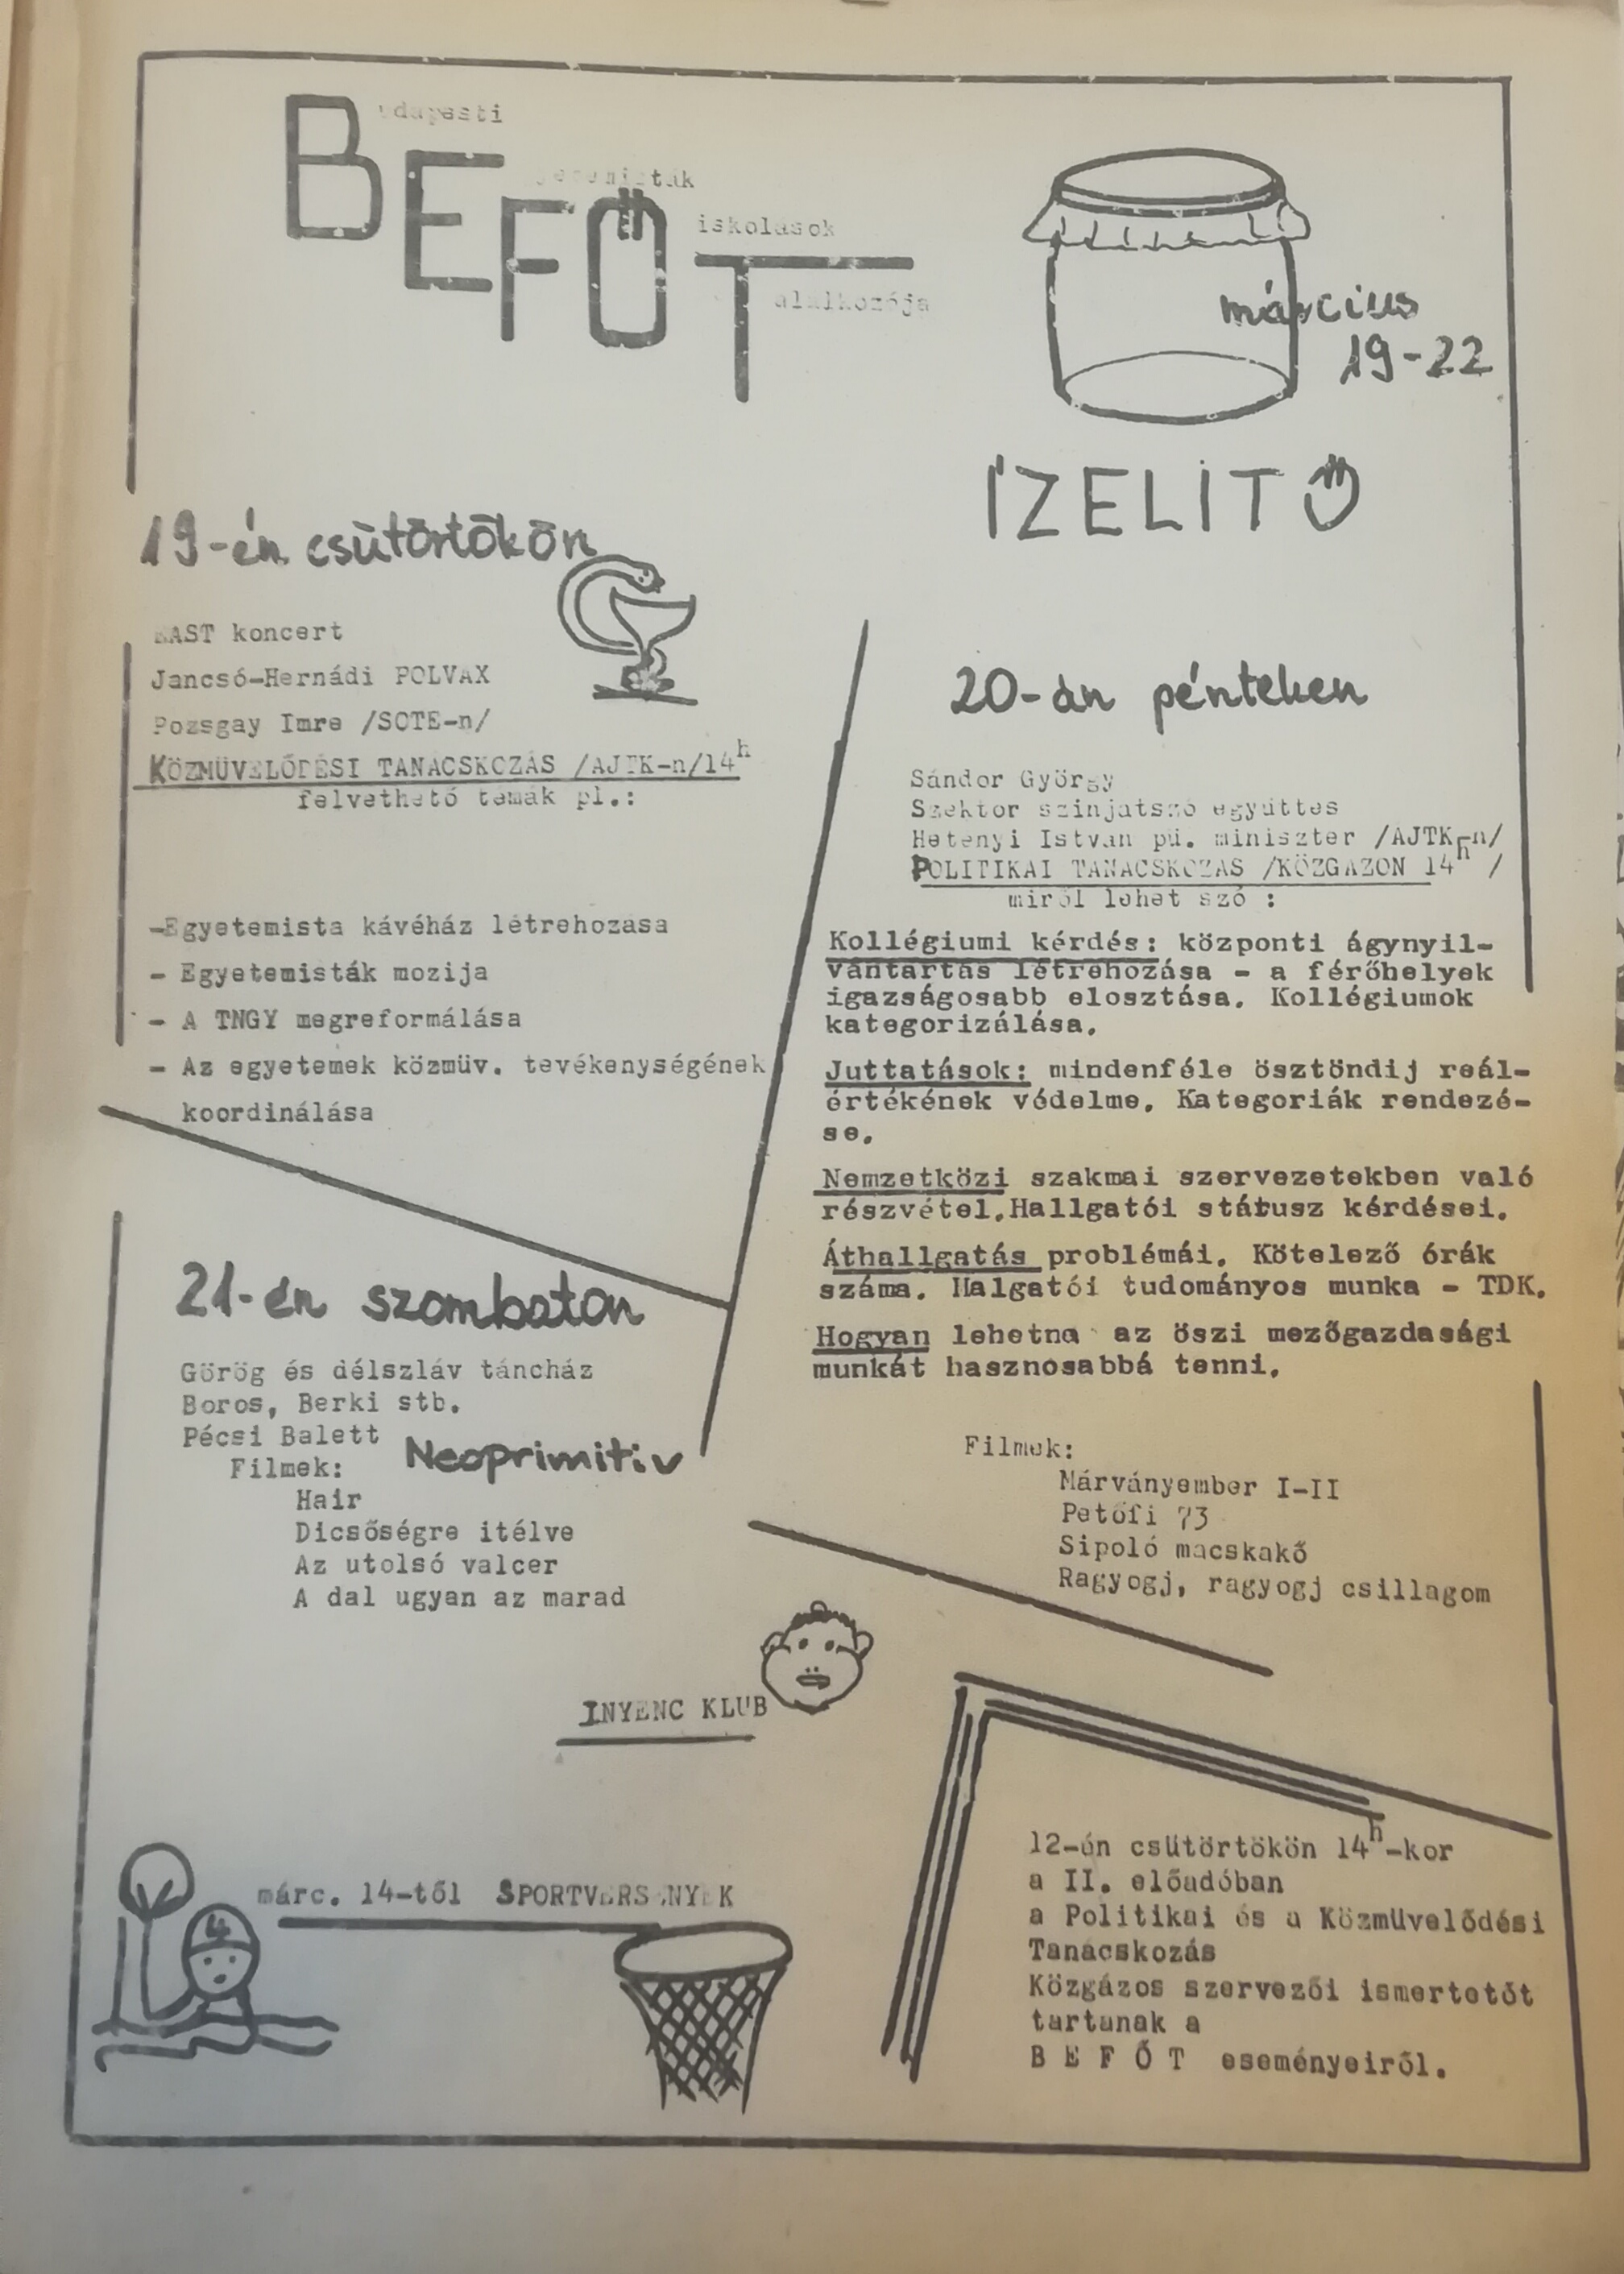 The program of the 'Befőt' in the 'Klub Közlöny'